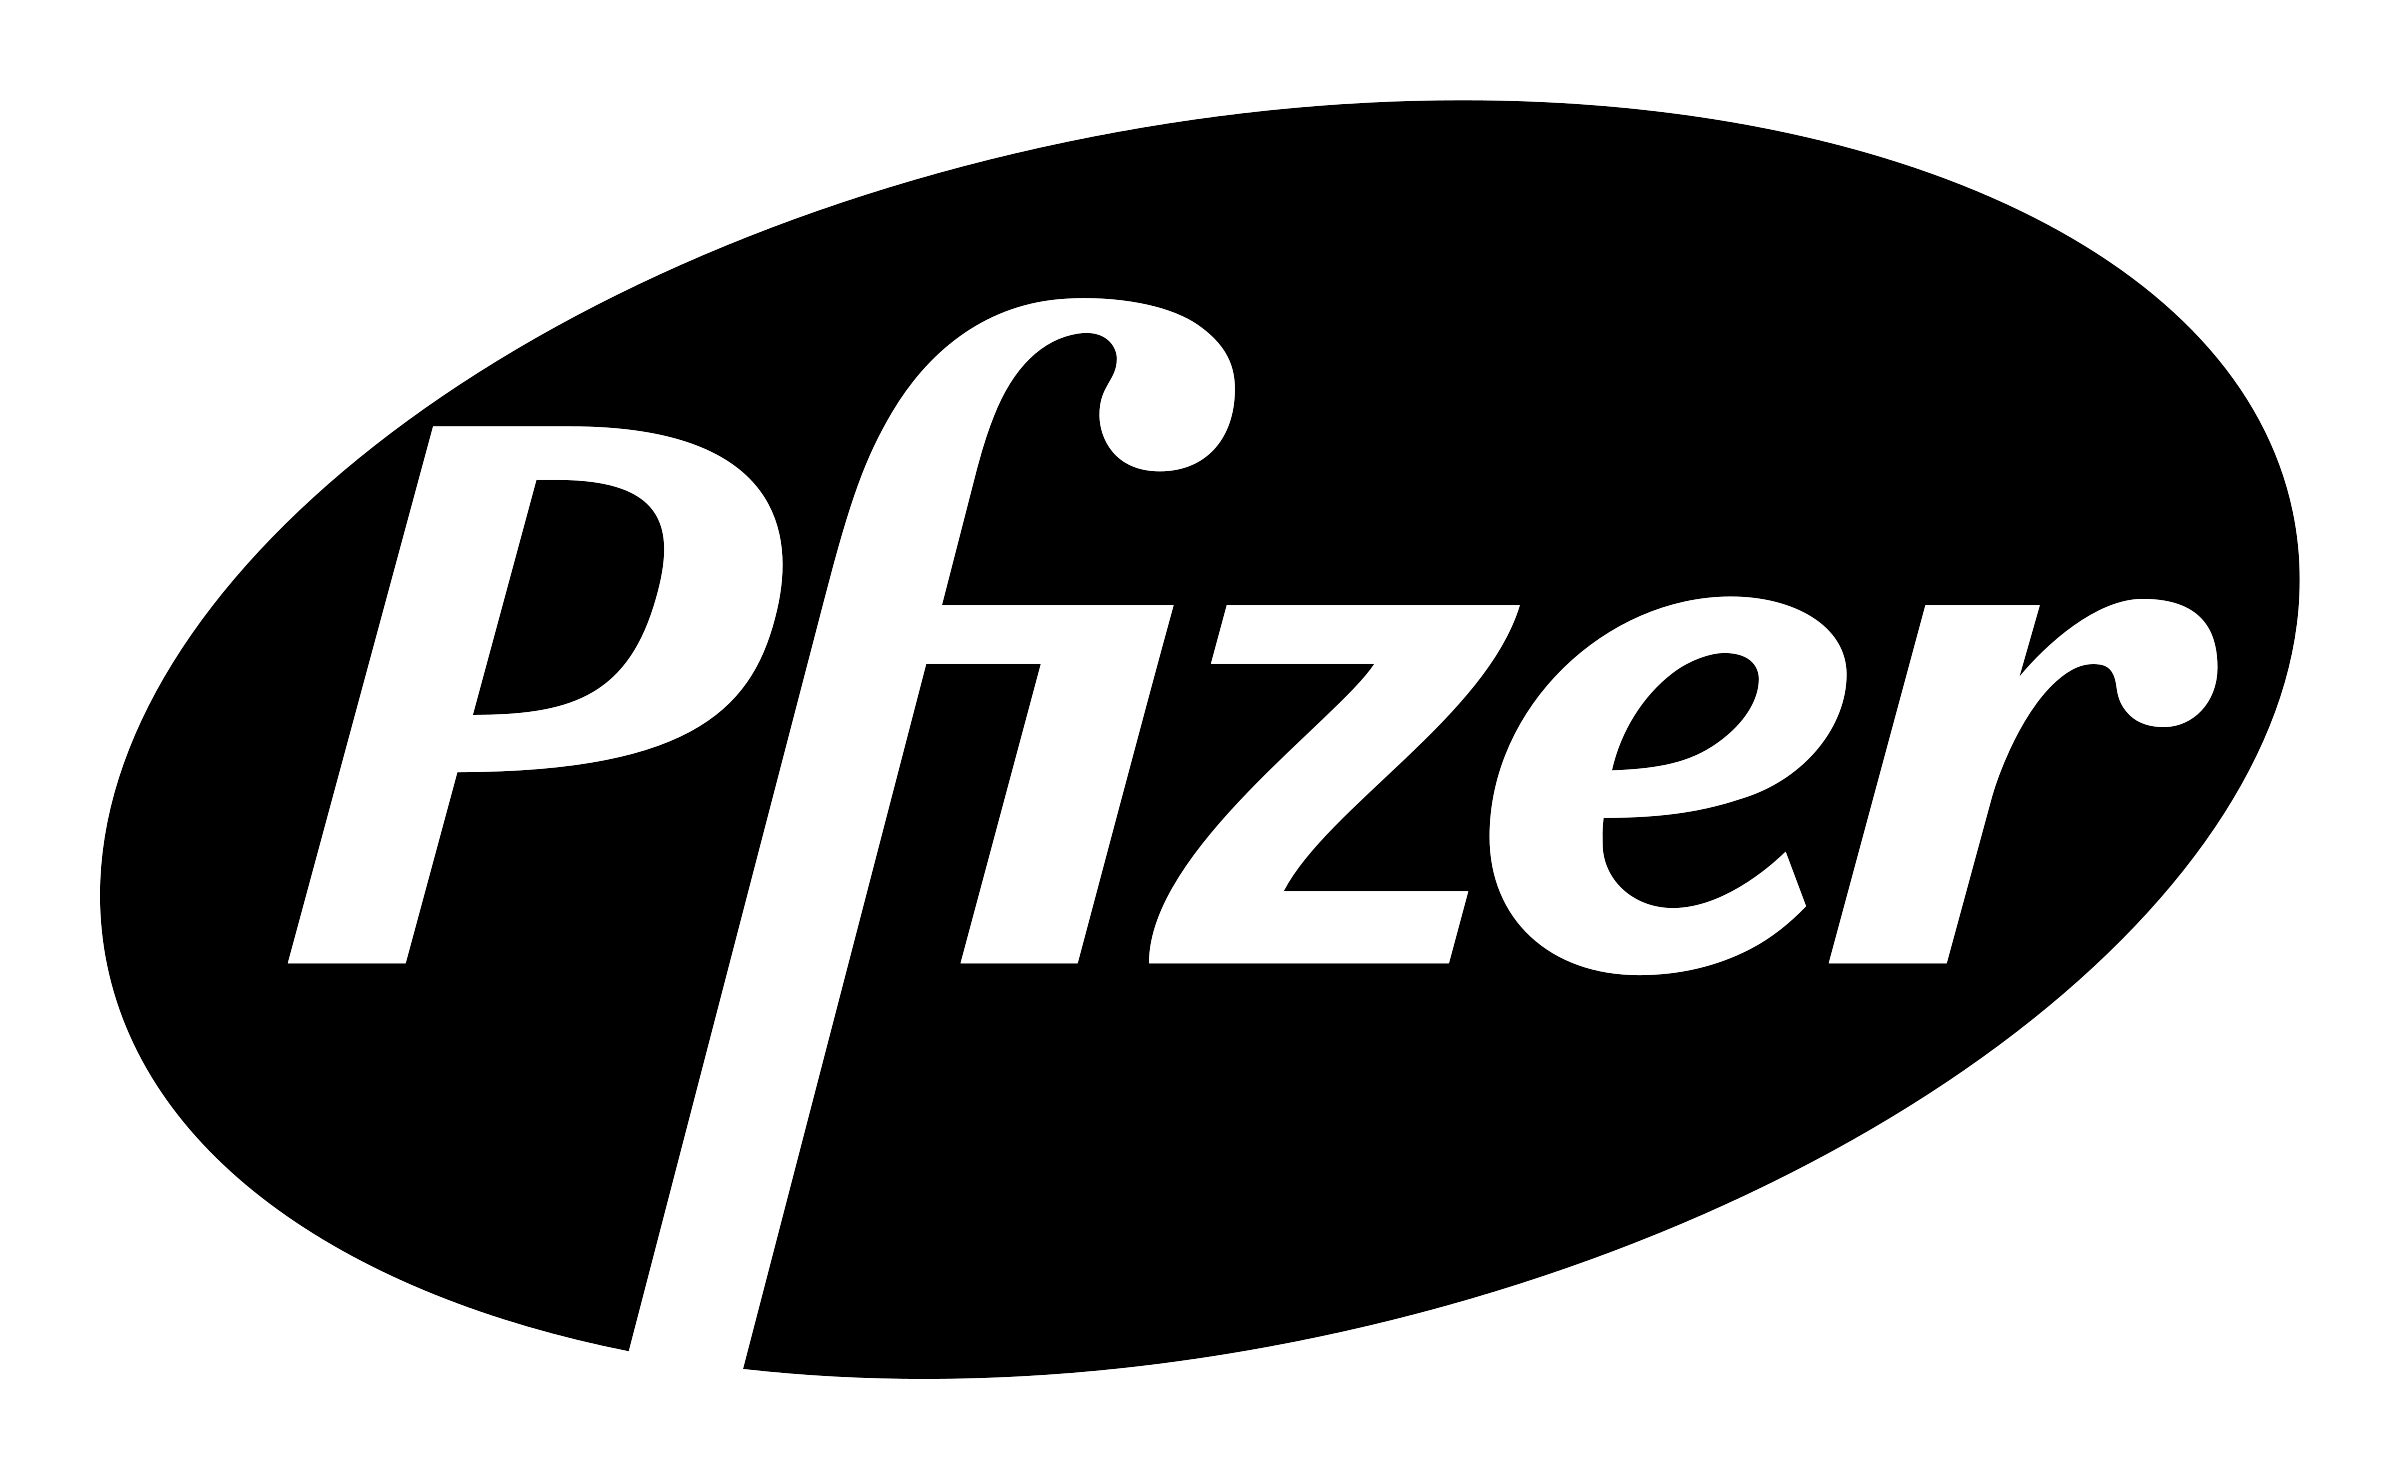 Pfizer Logo - Pfizer Logo PNG Transparent & SVG Vector - Freebie Supply